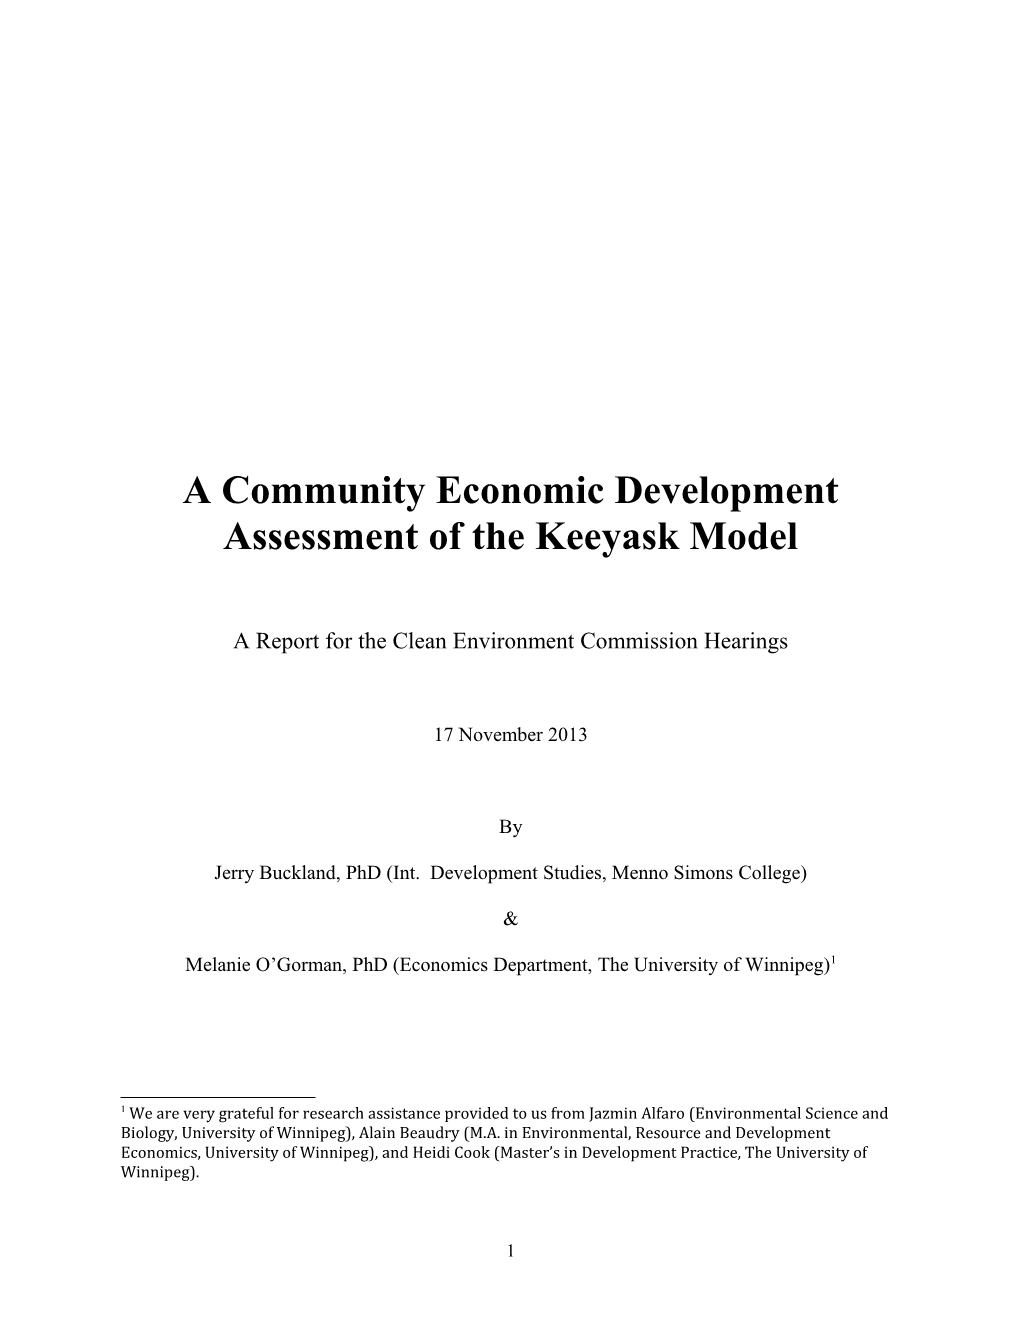 Community-Economic Assessment of the Keeyask Model